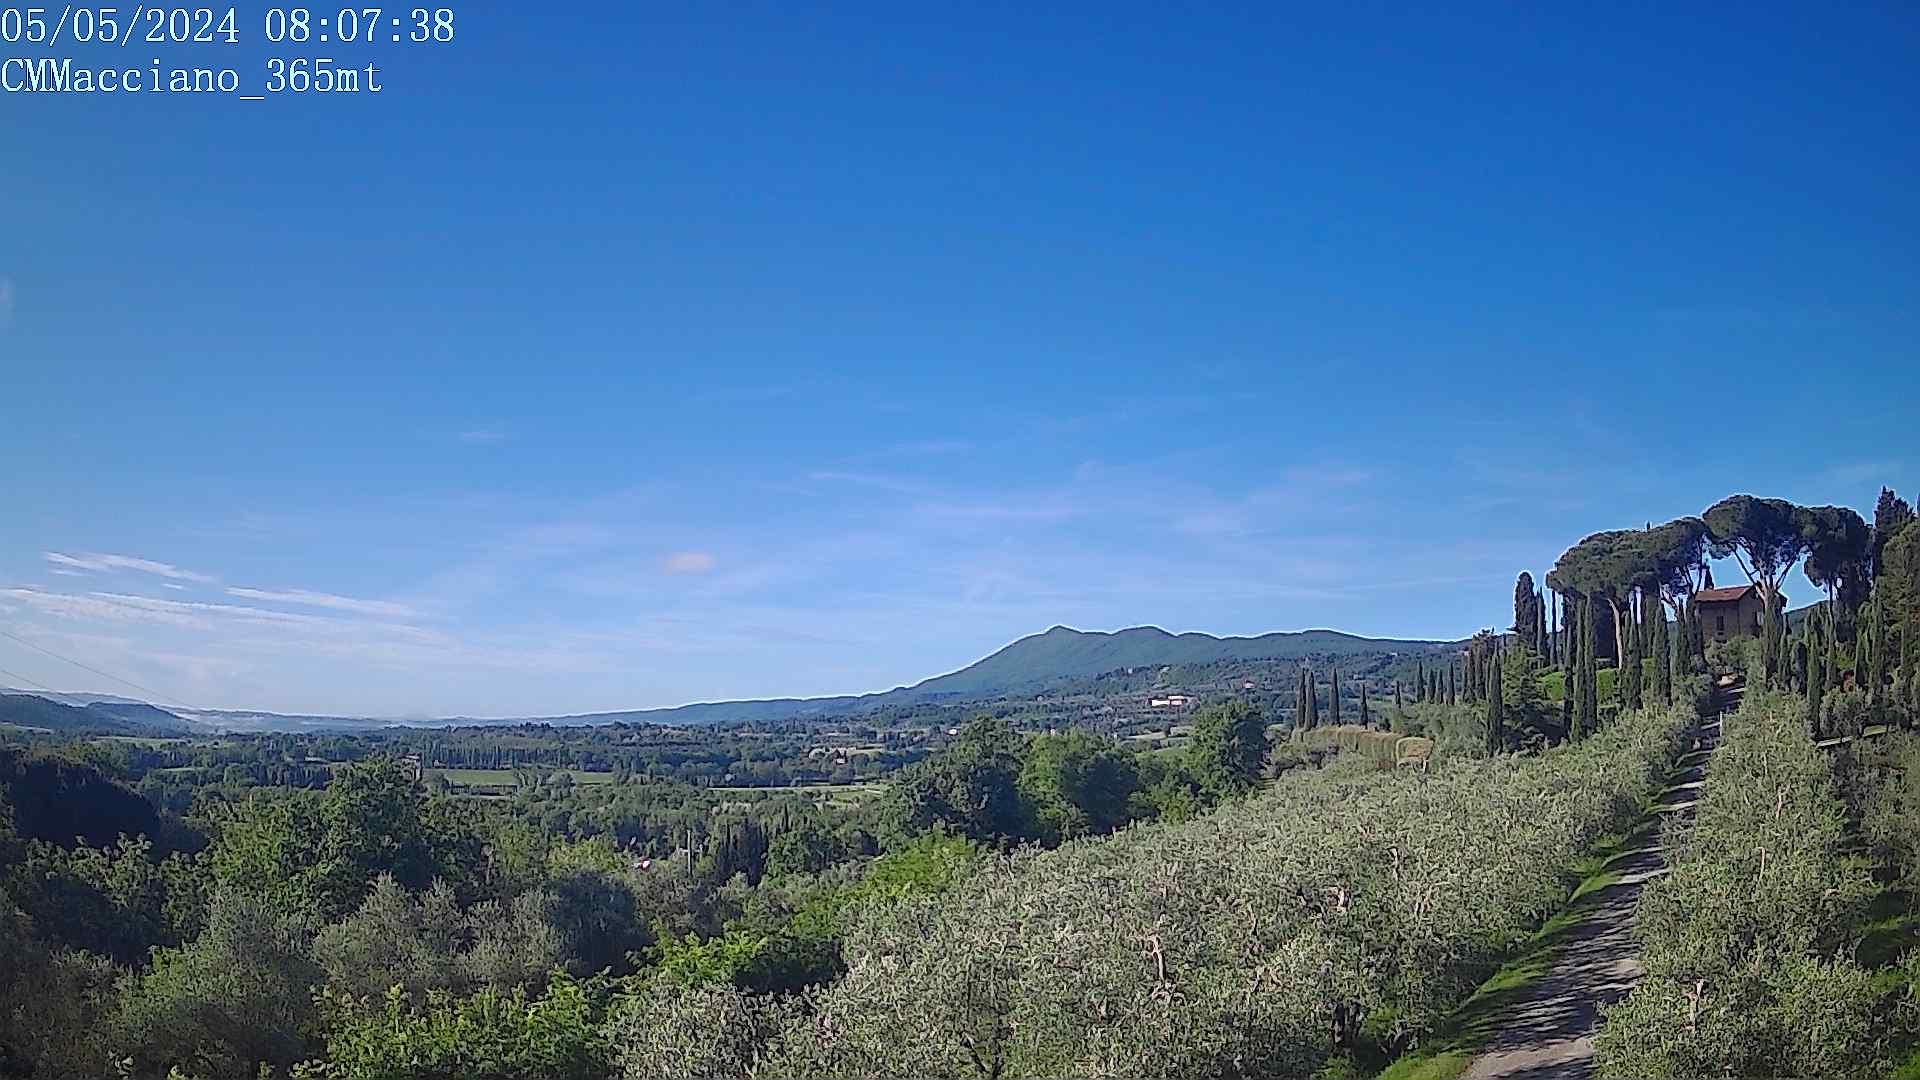 Webcam Macciano, Siena